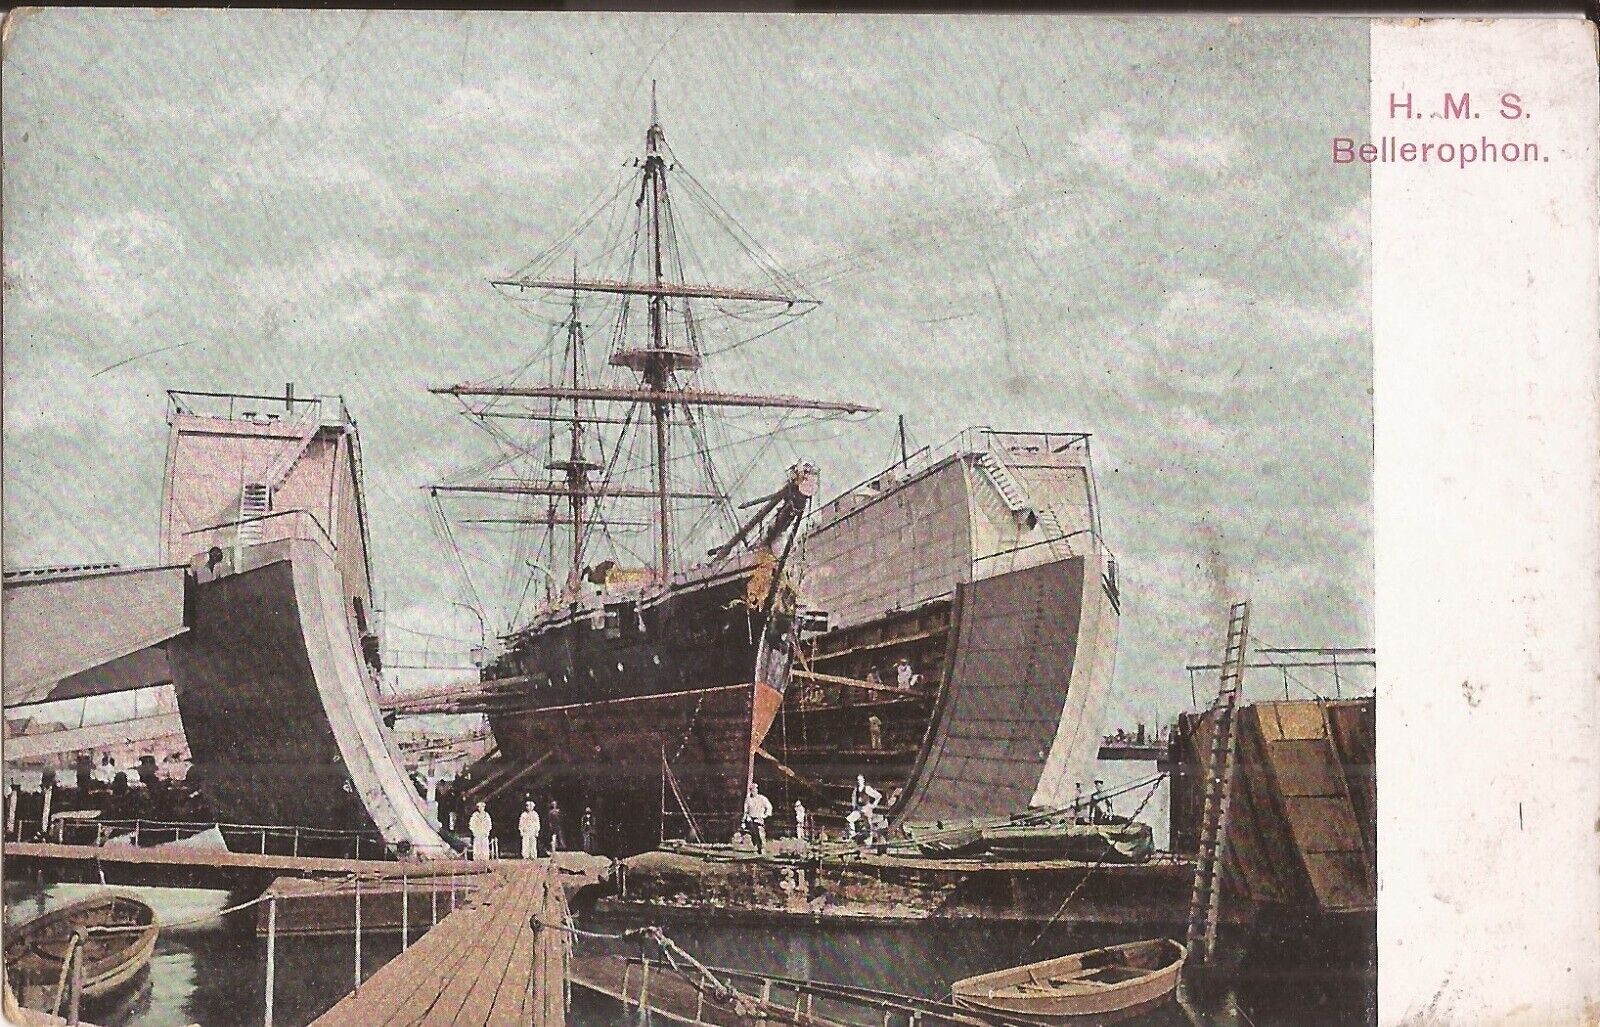 HMS Bellerophon – Hamilton, BERMUDA - Drydock